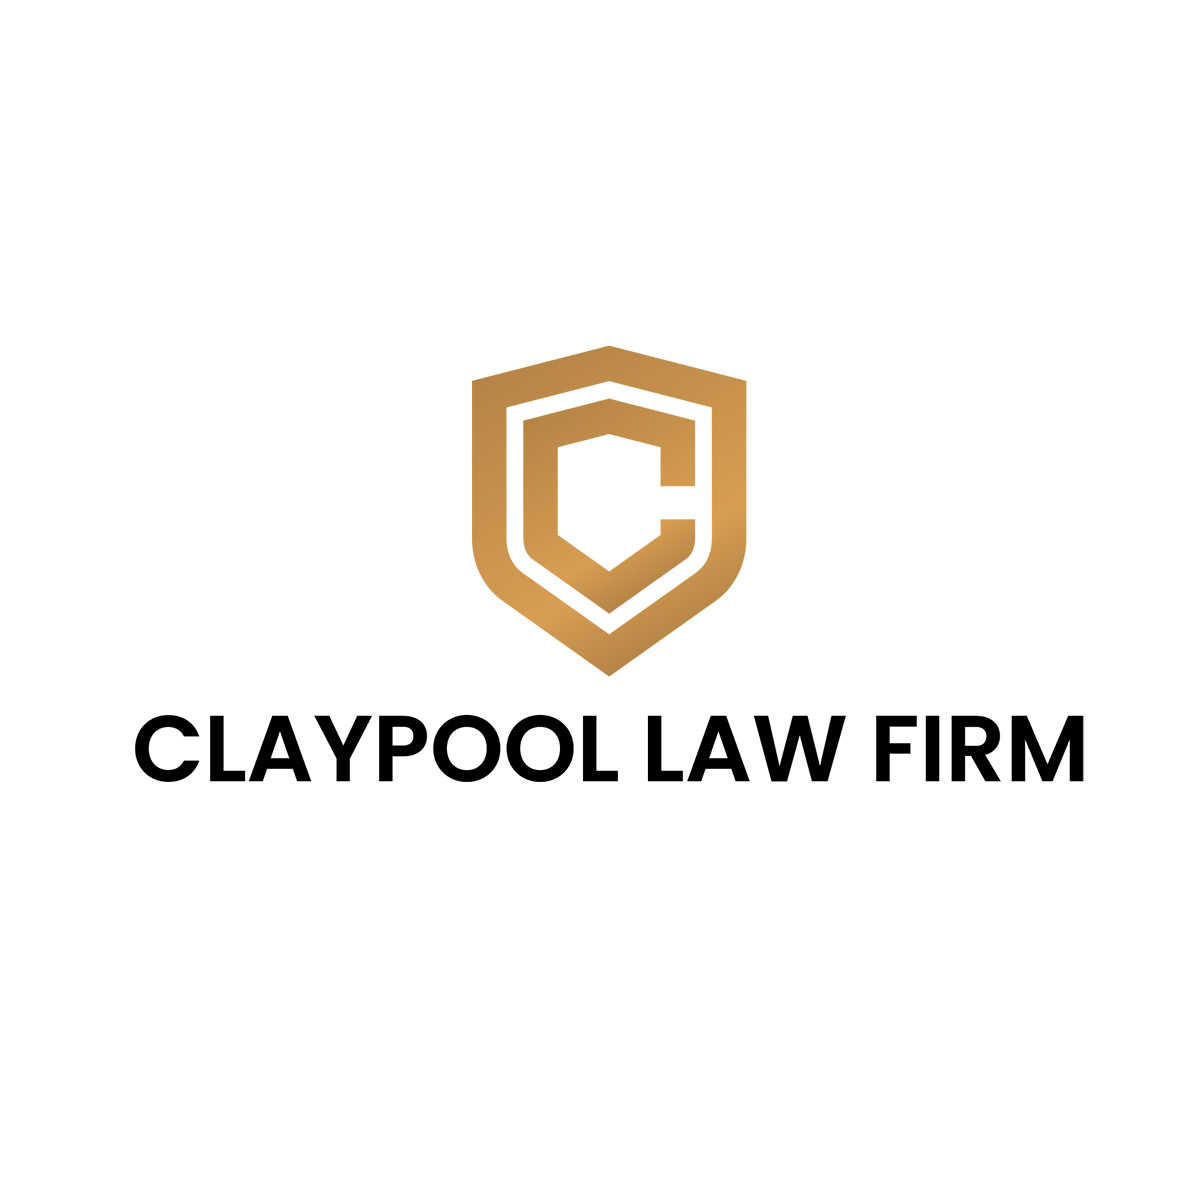 Claypool Law Firm Pasadena (626)602-1333